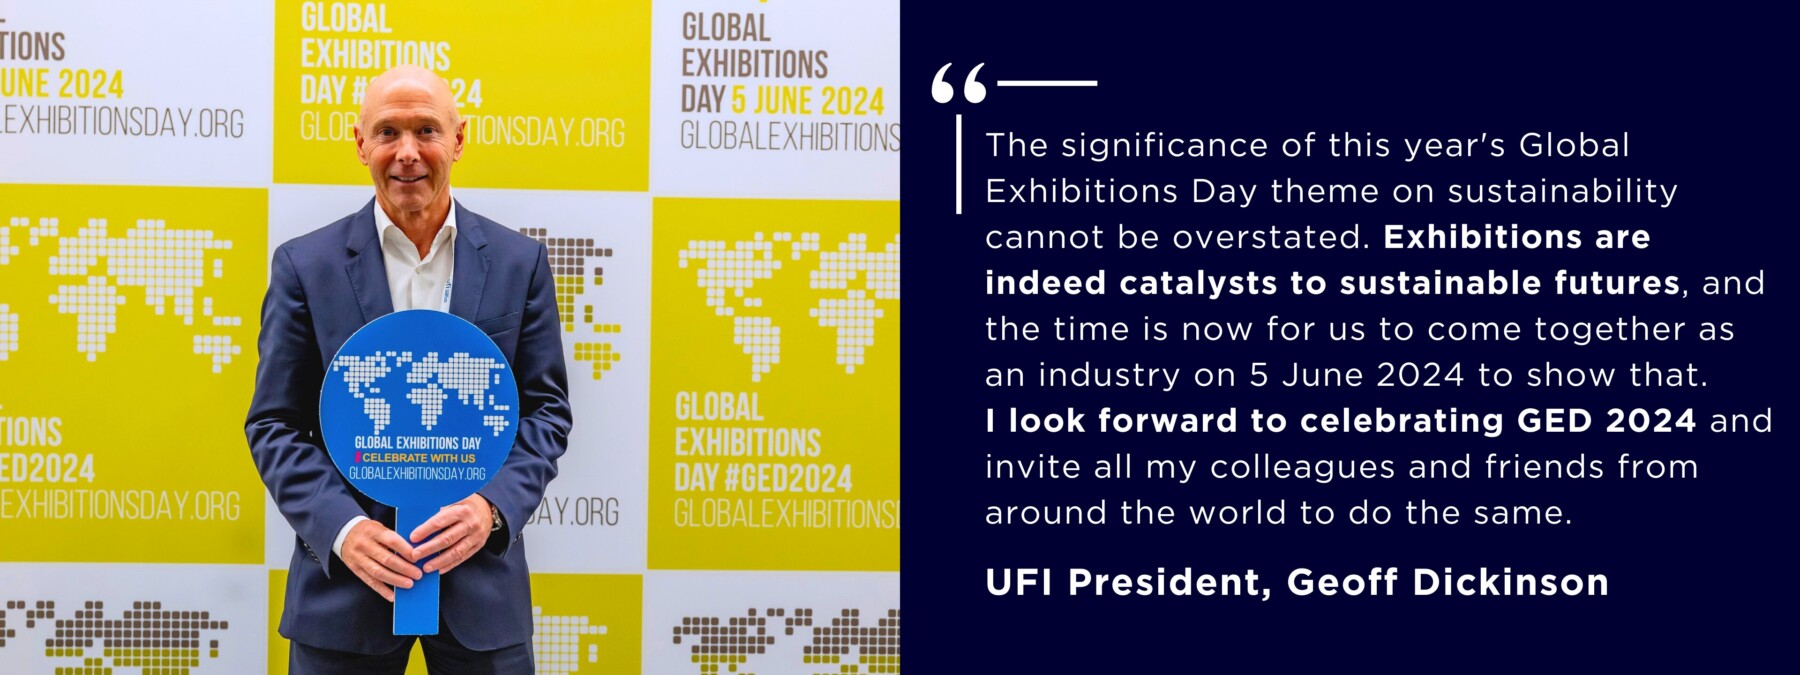 Global Exhibition Day - UFI President